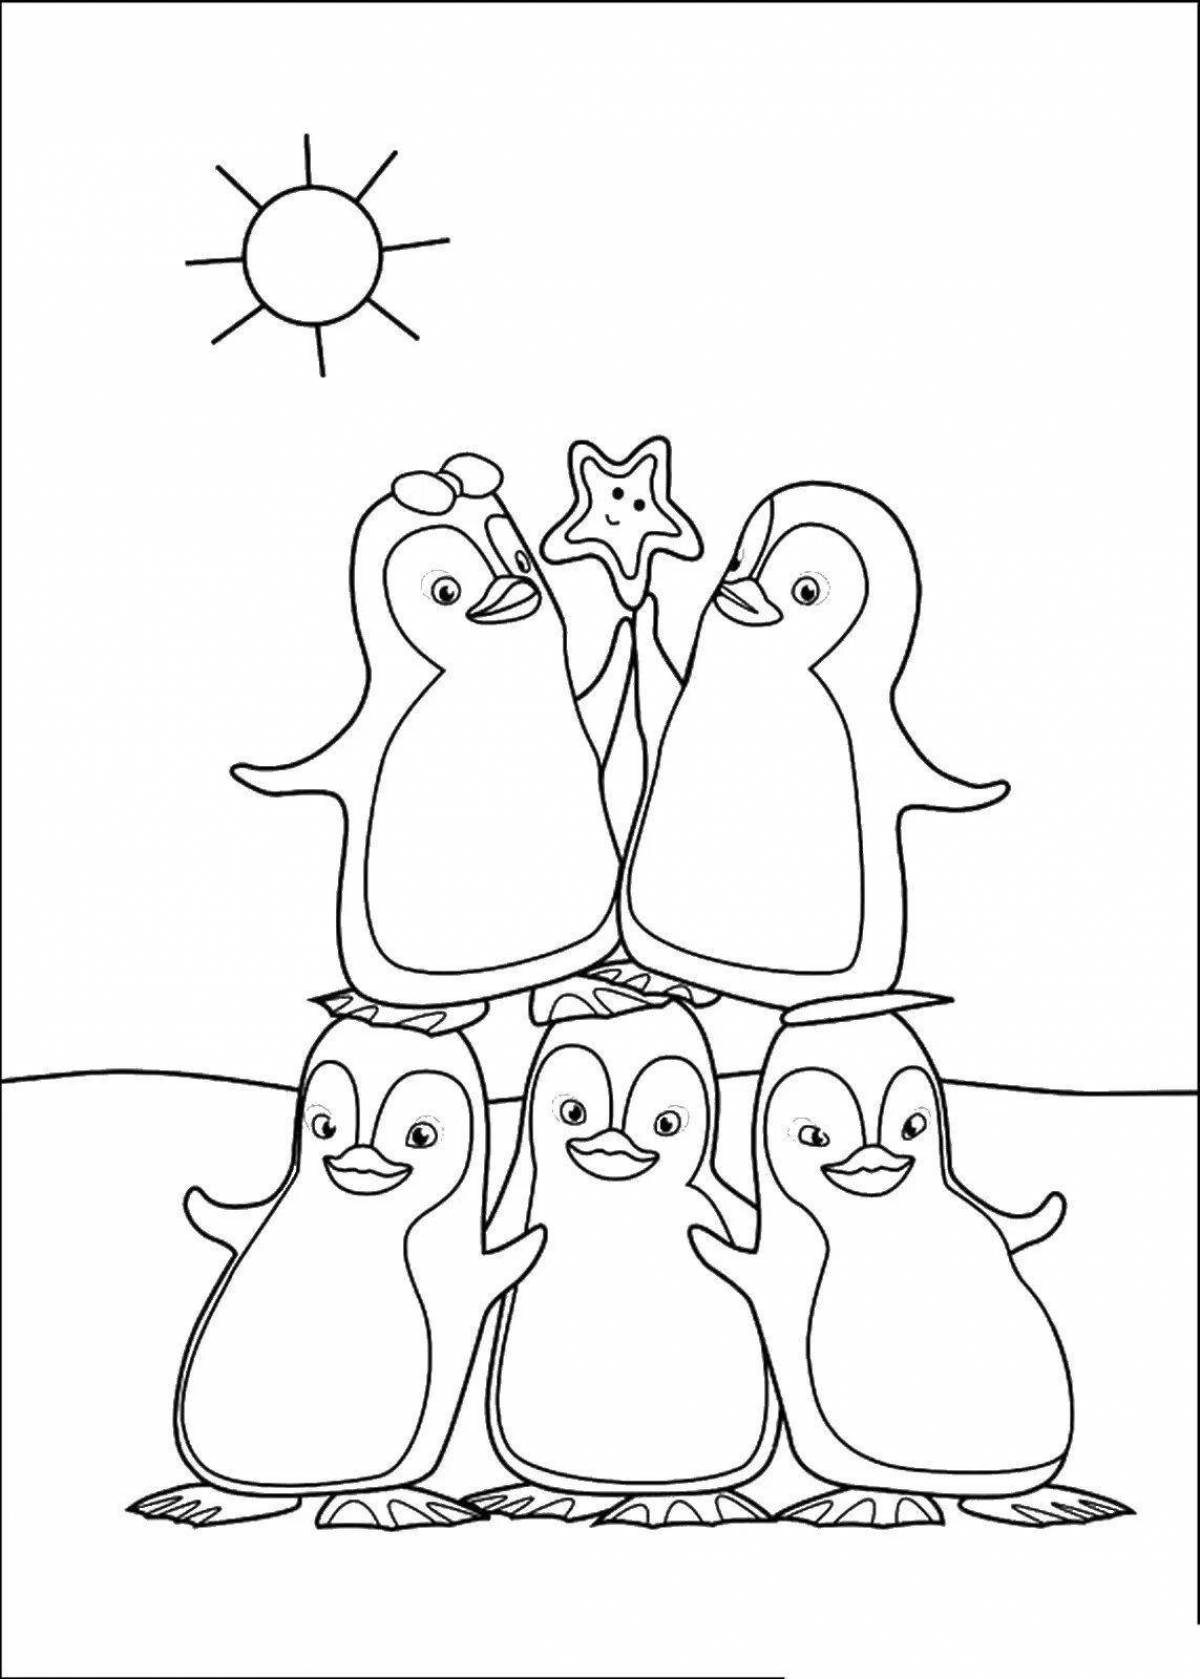 Colouring bright penguin family